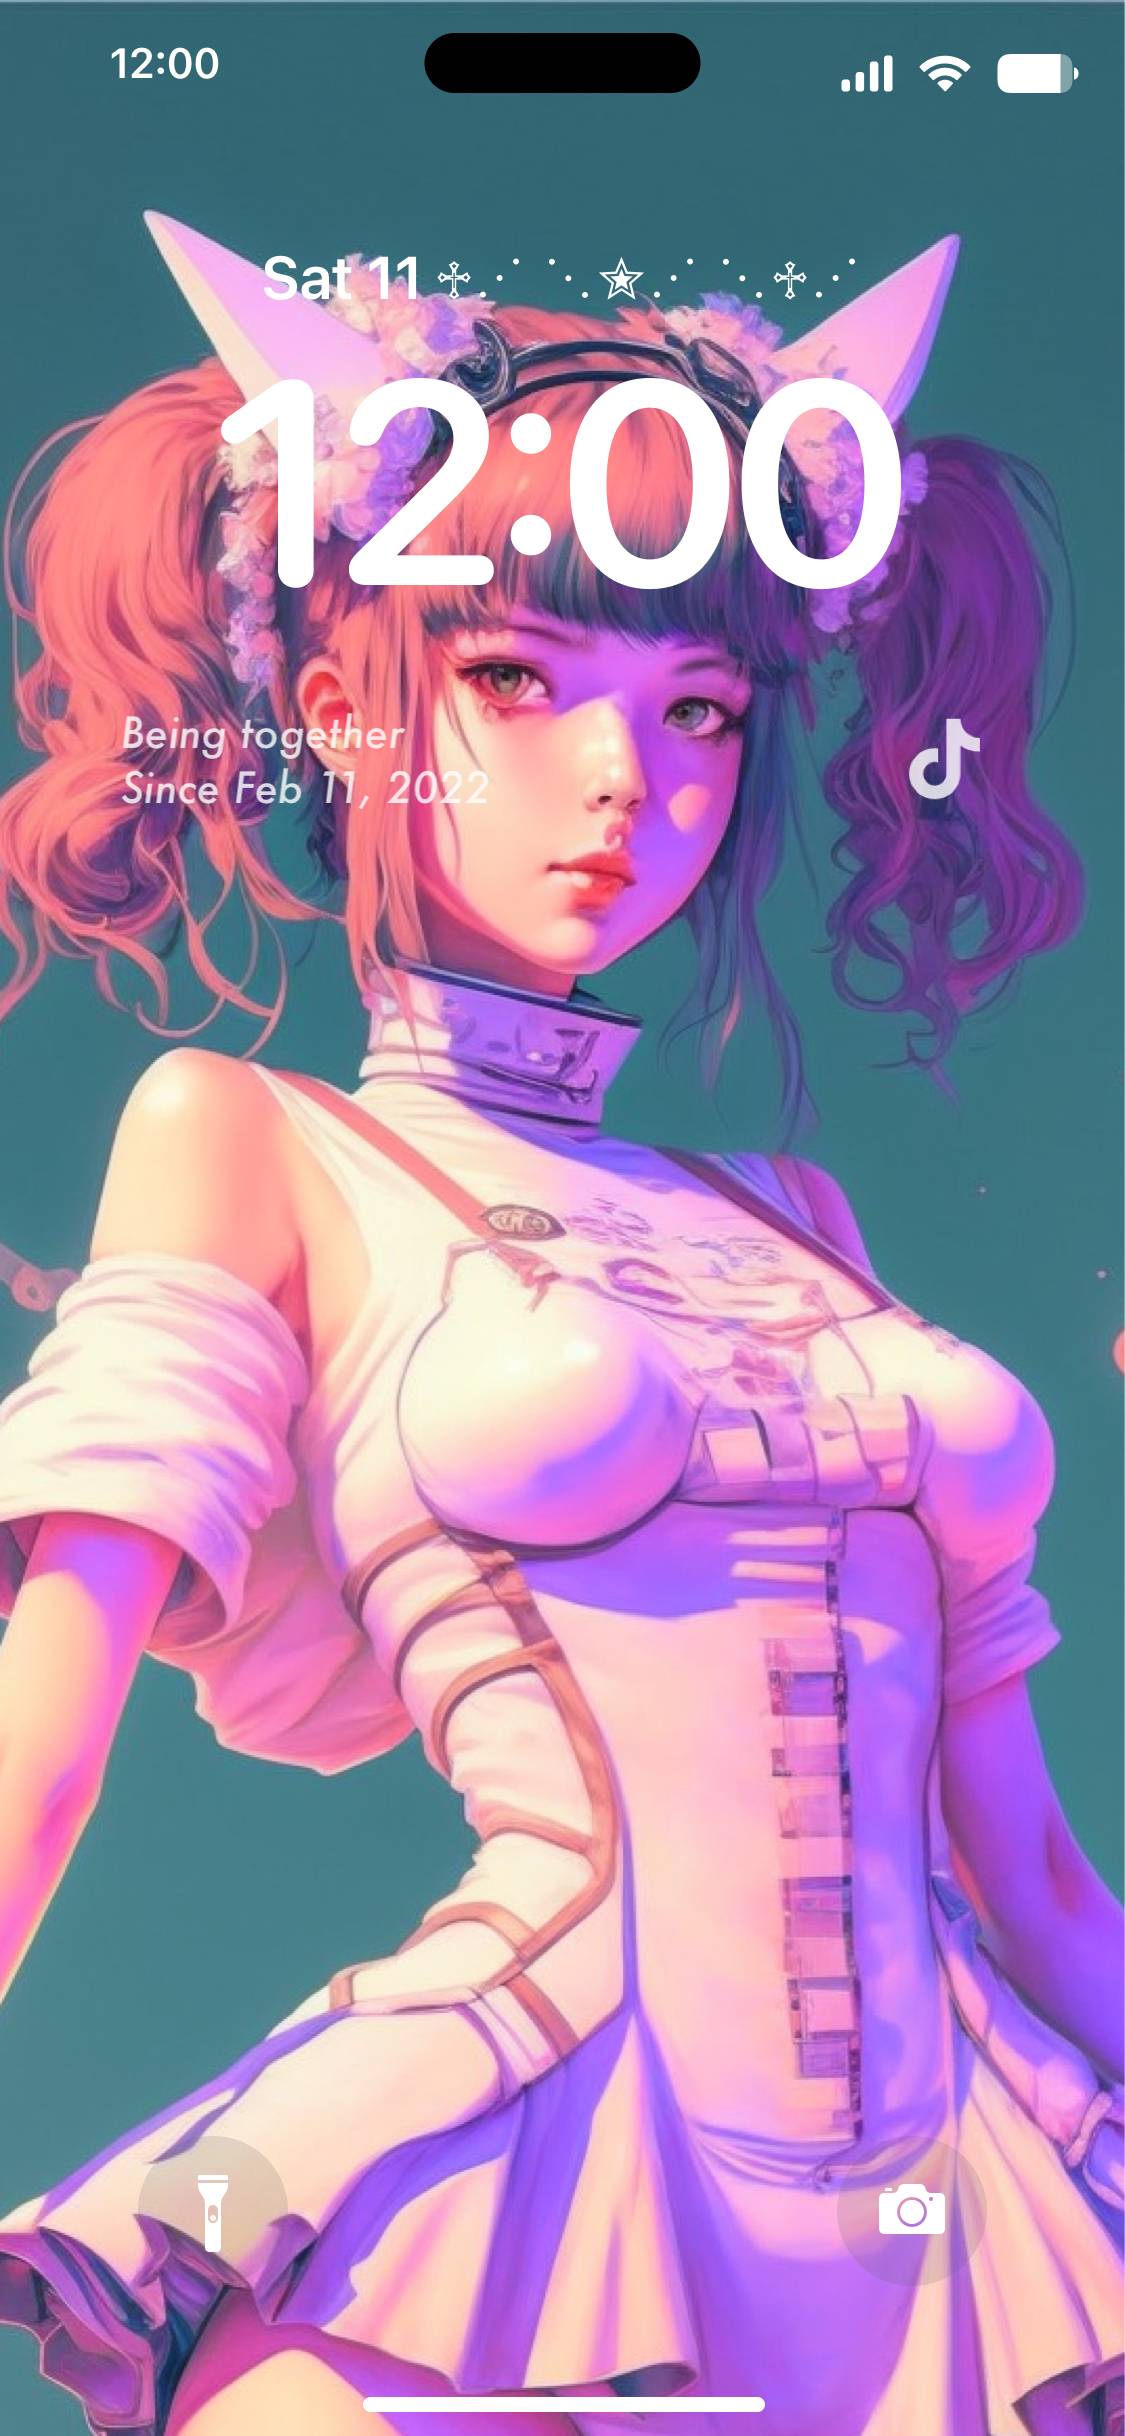 Cyberpunk girl lock screen Дэлгэцний түгжээ[6J3XZiCvg7JlsTzNcMWe]